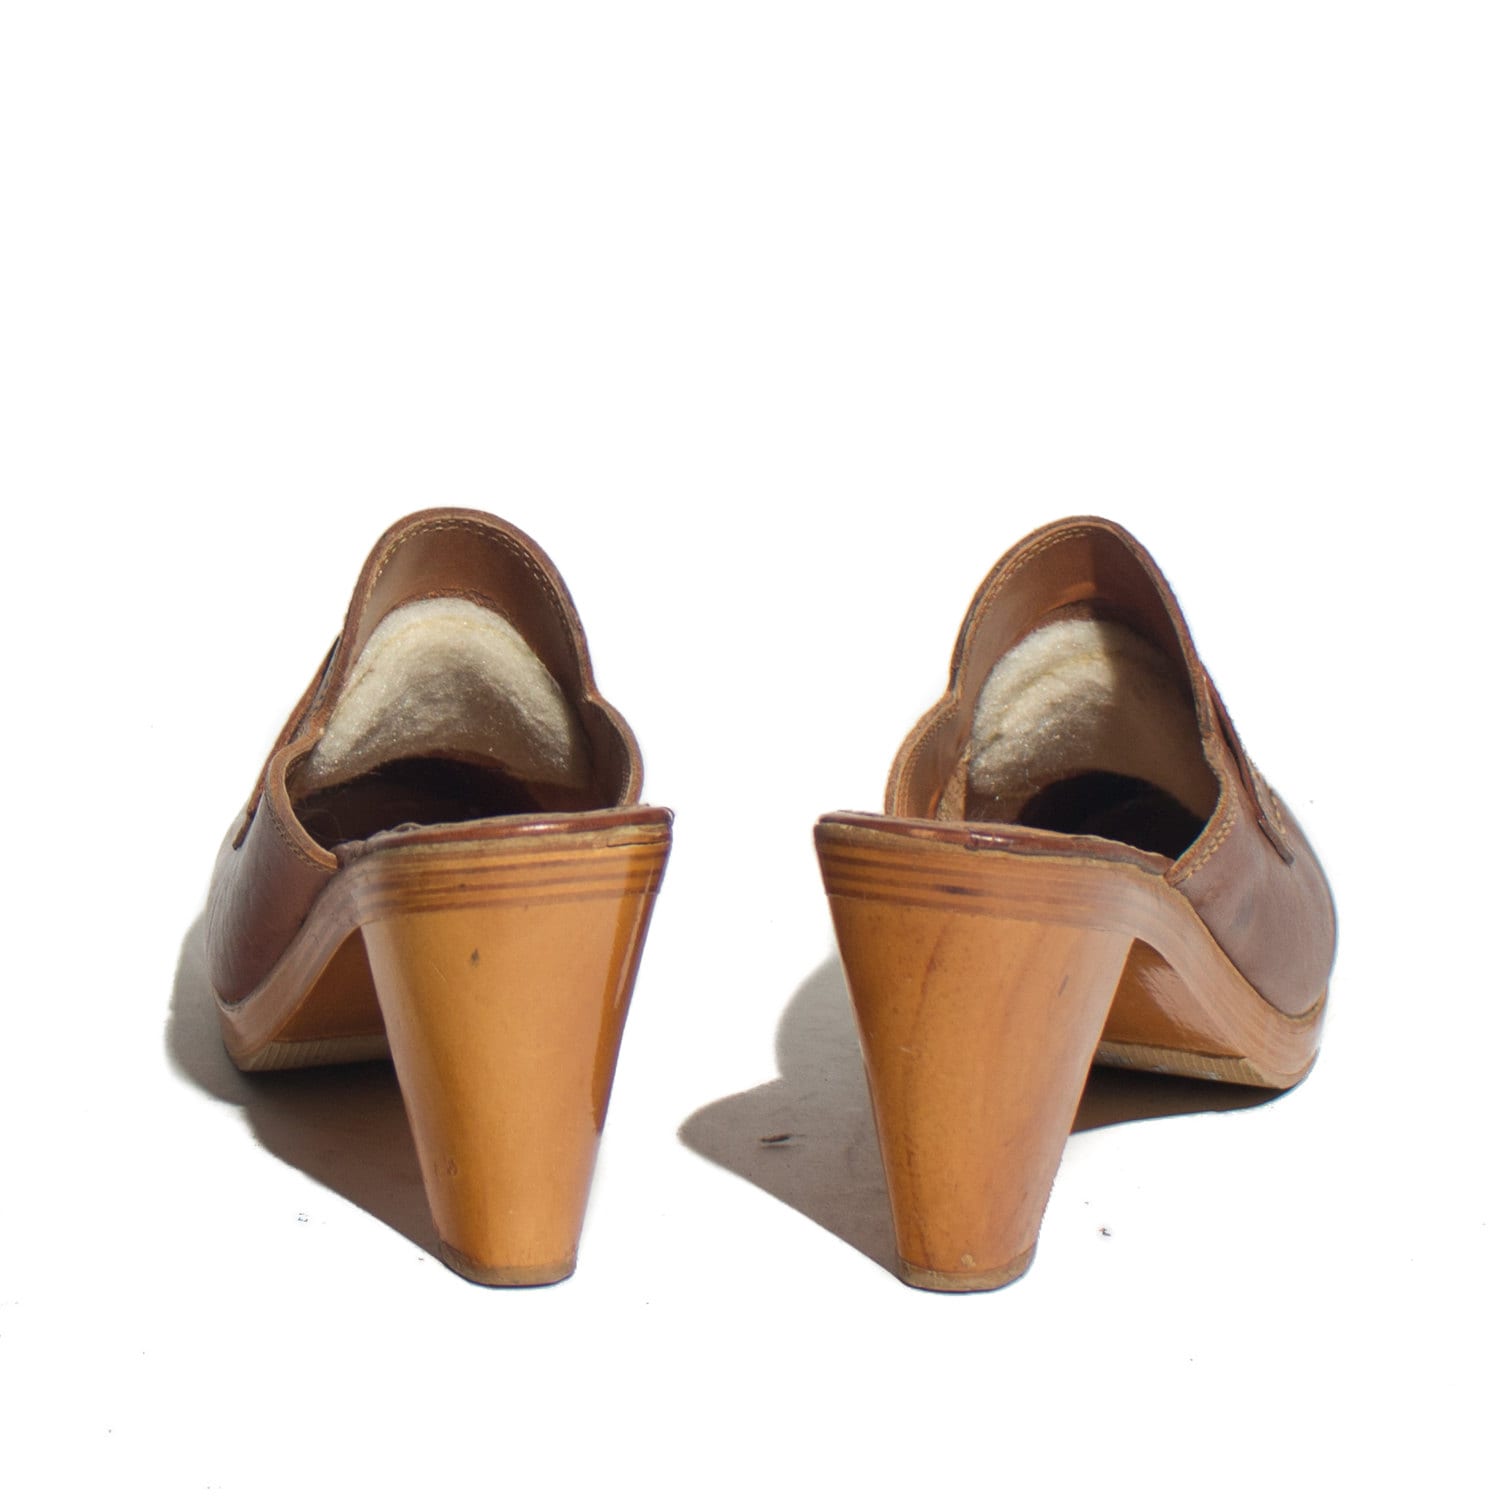 10 B Women's Wooden High Heel Clogs Mules w/ Brown